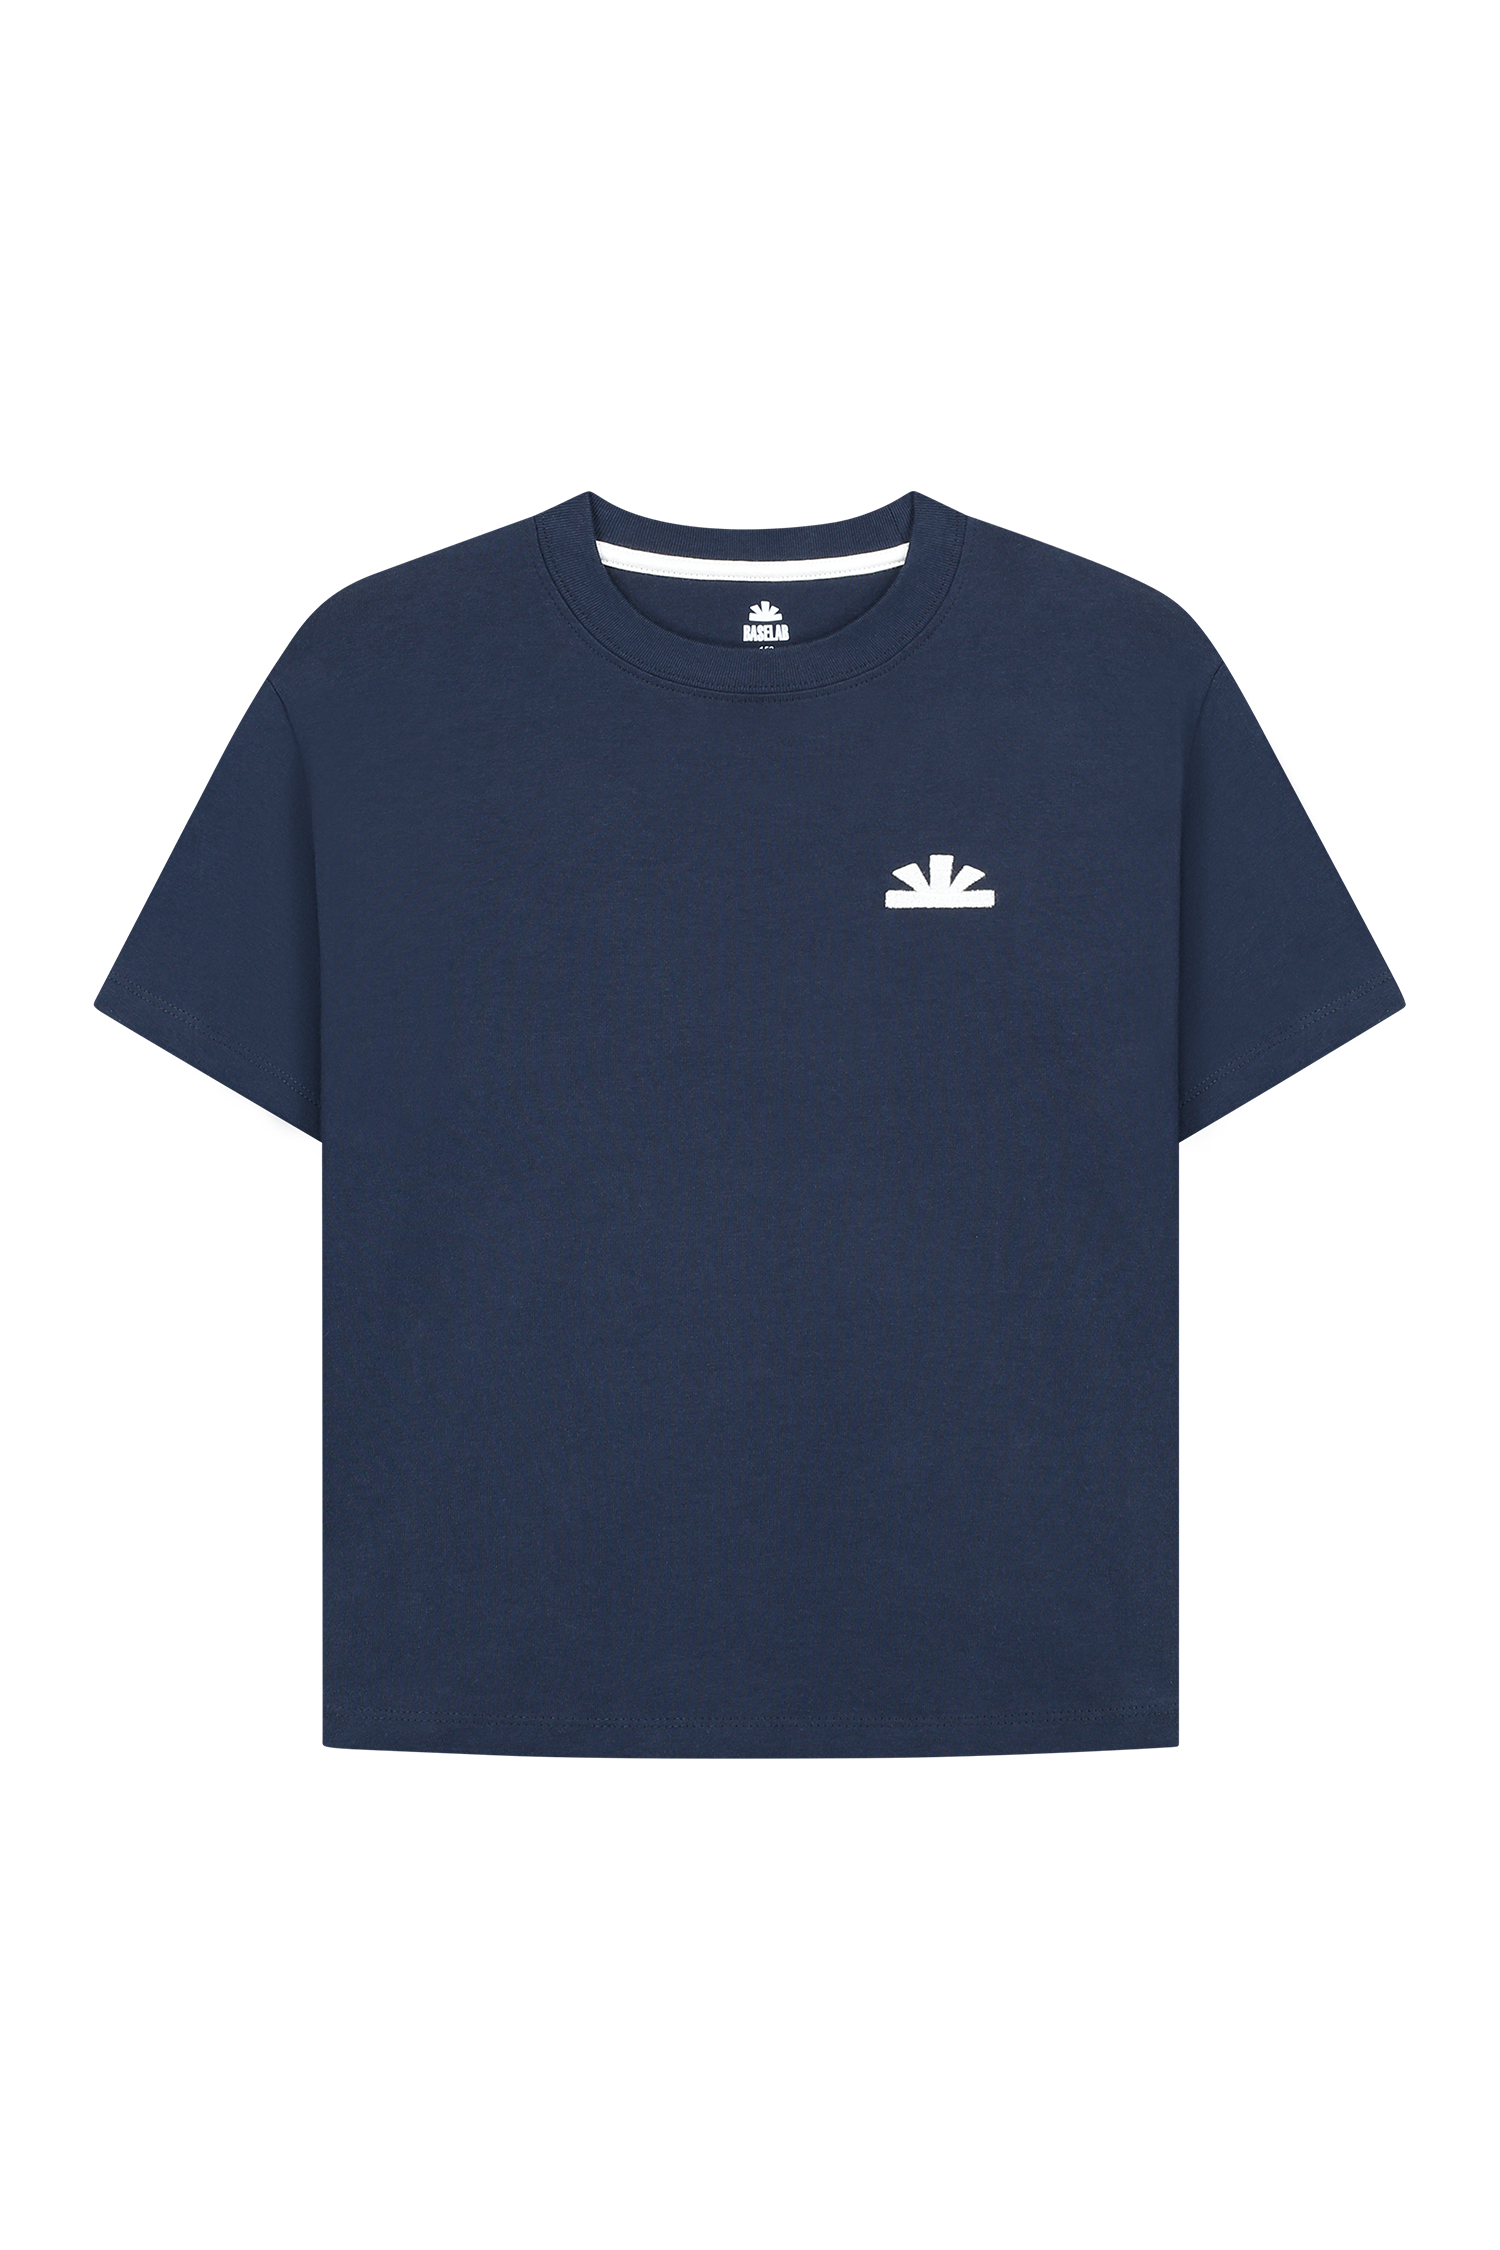 Sunrise Camiseta azul